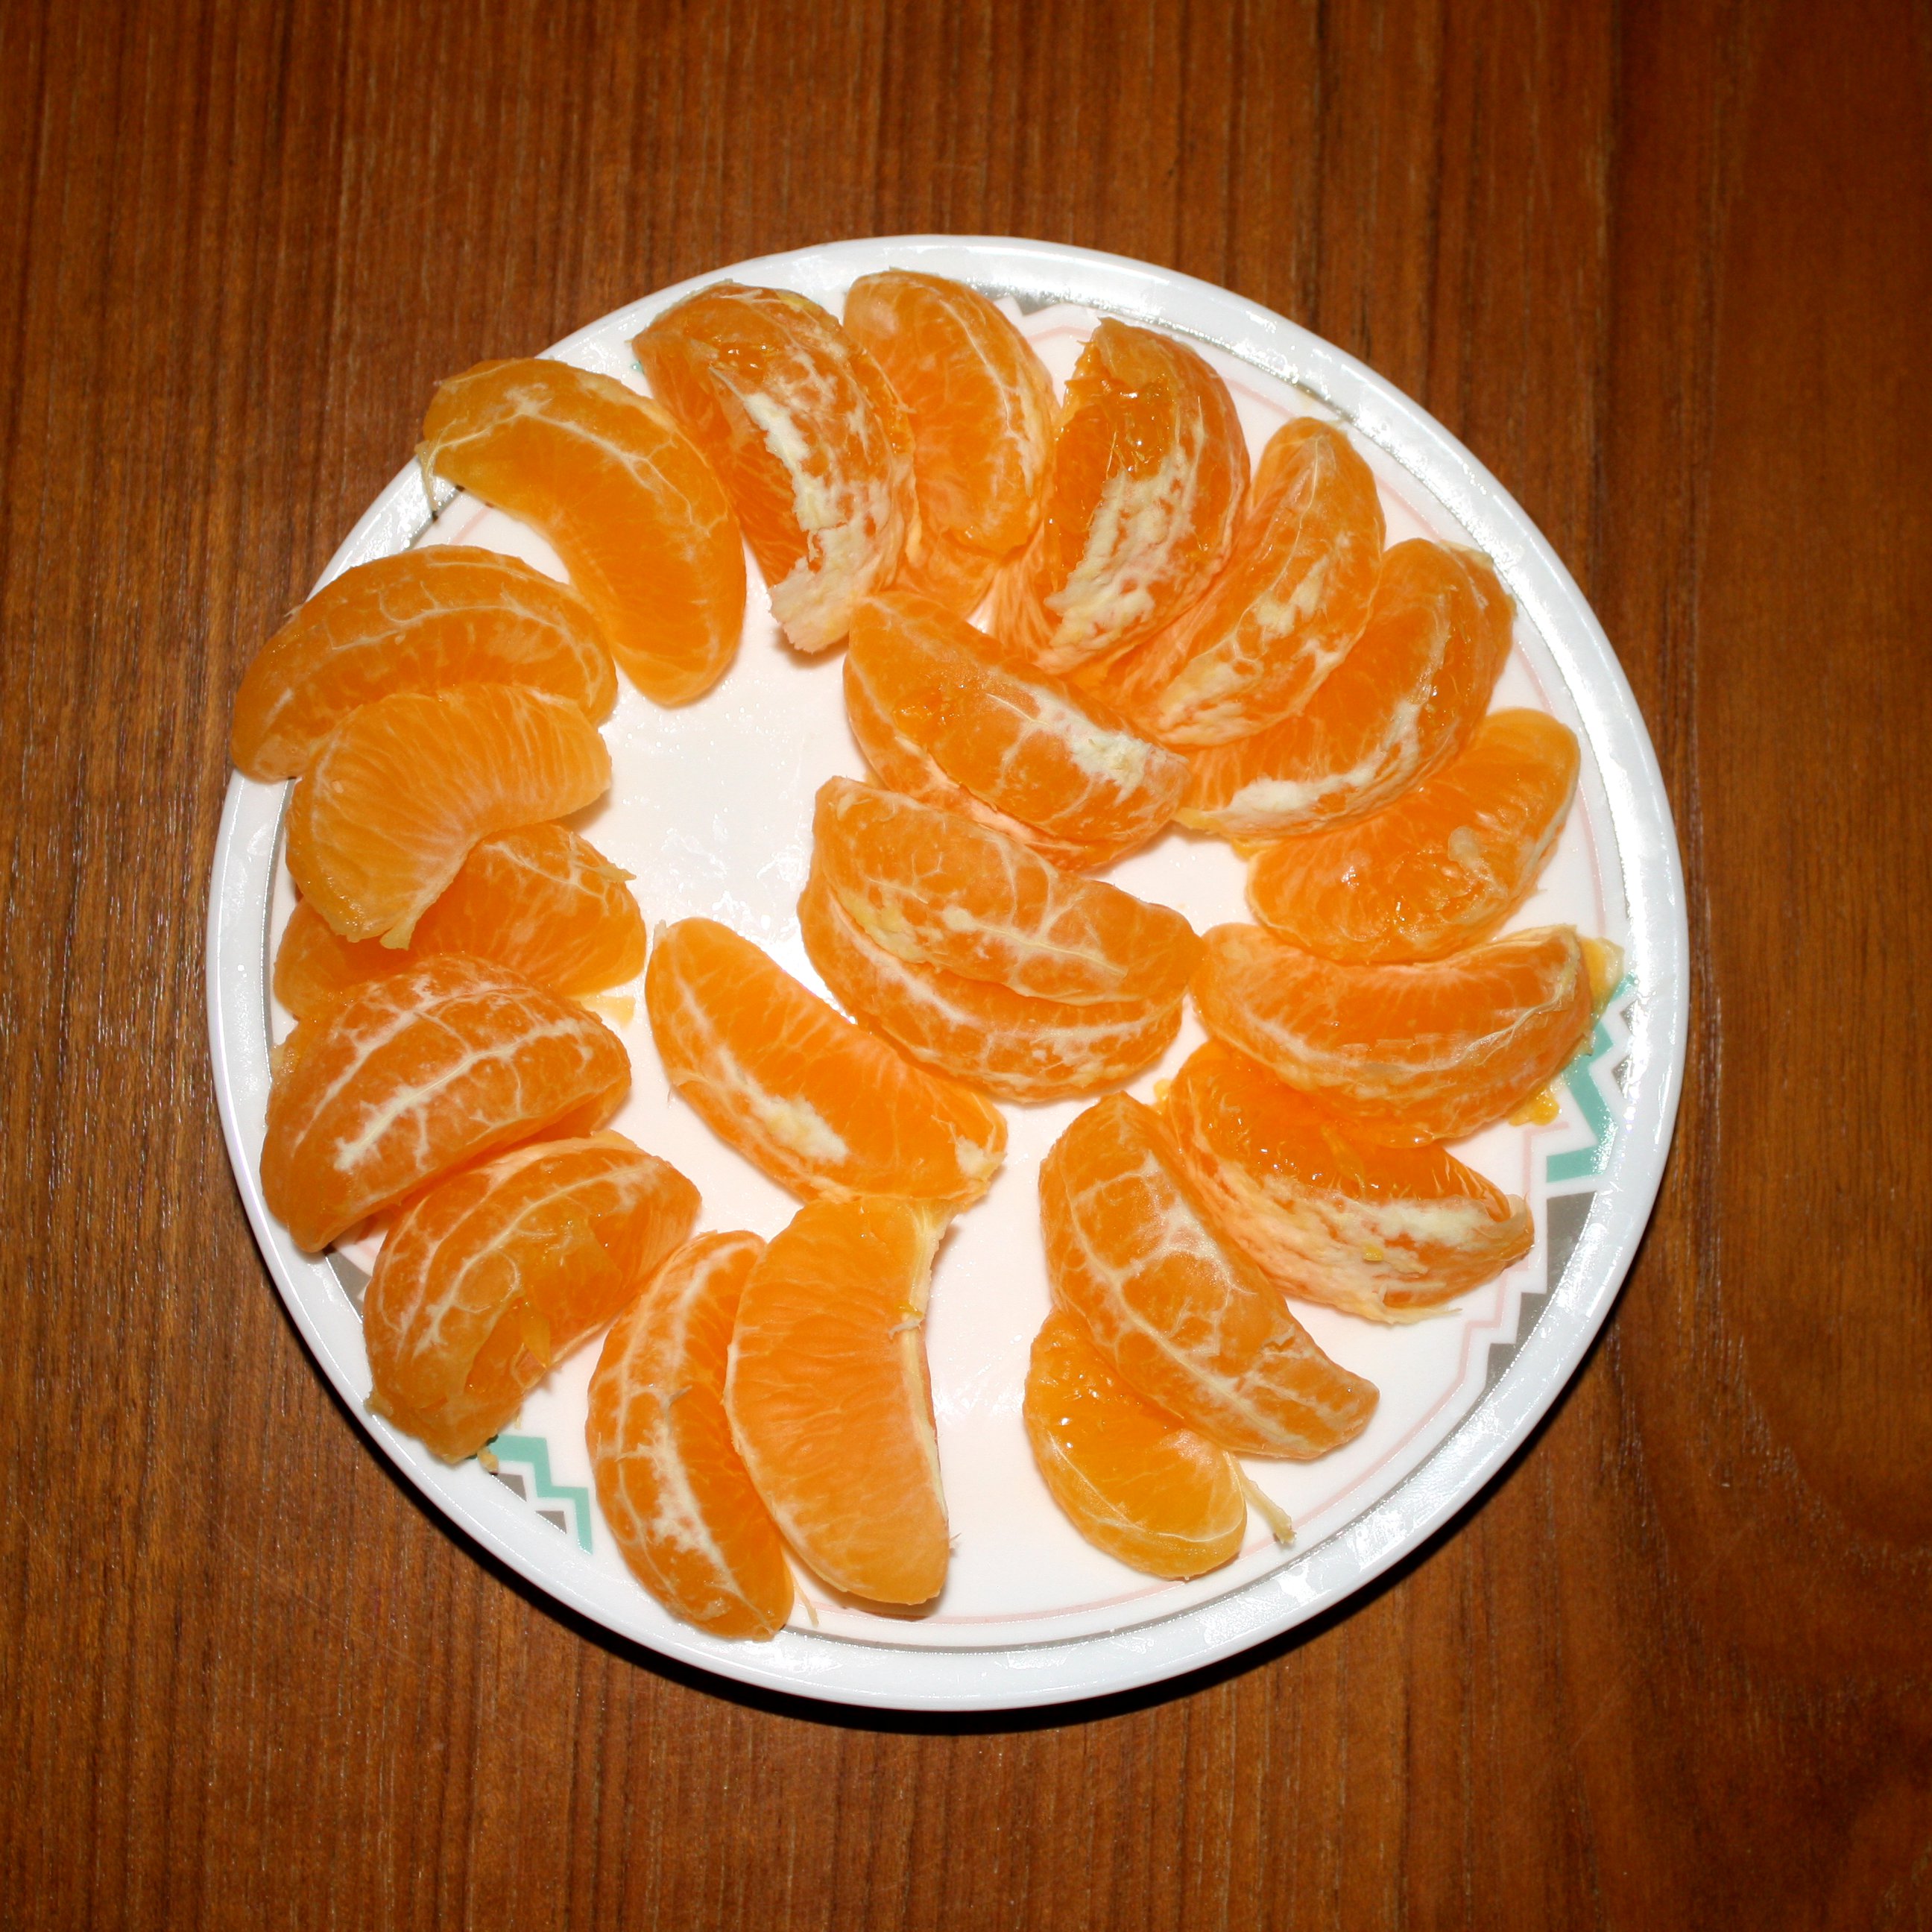 Mandarin Orange Sections Picture Free Photograph Photos Public Domain